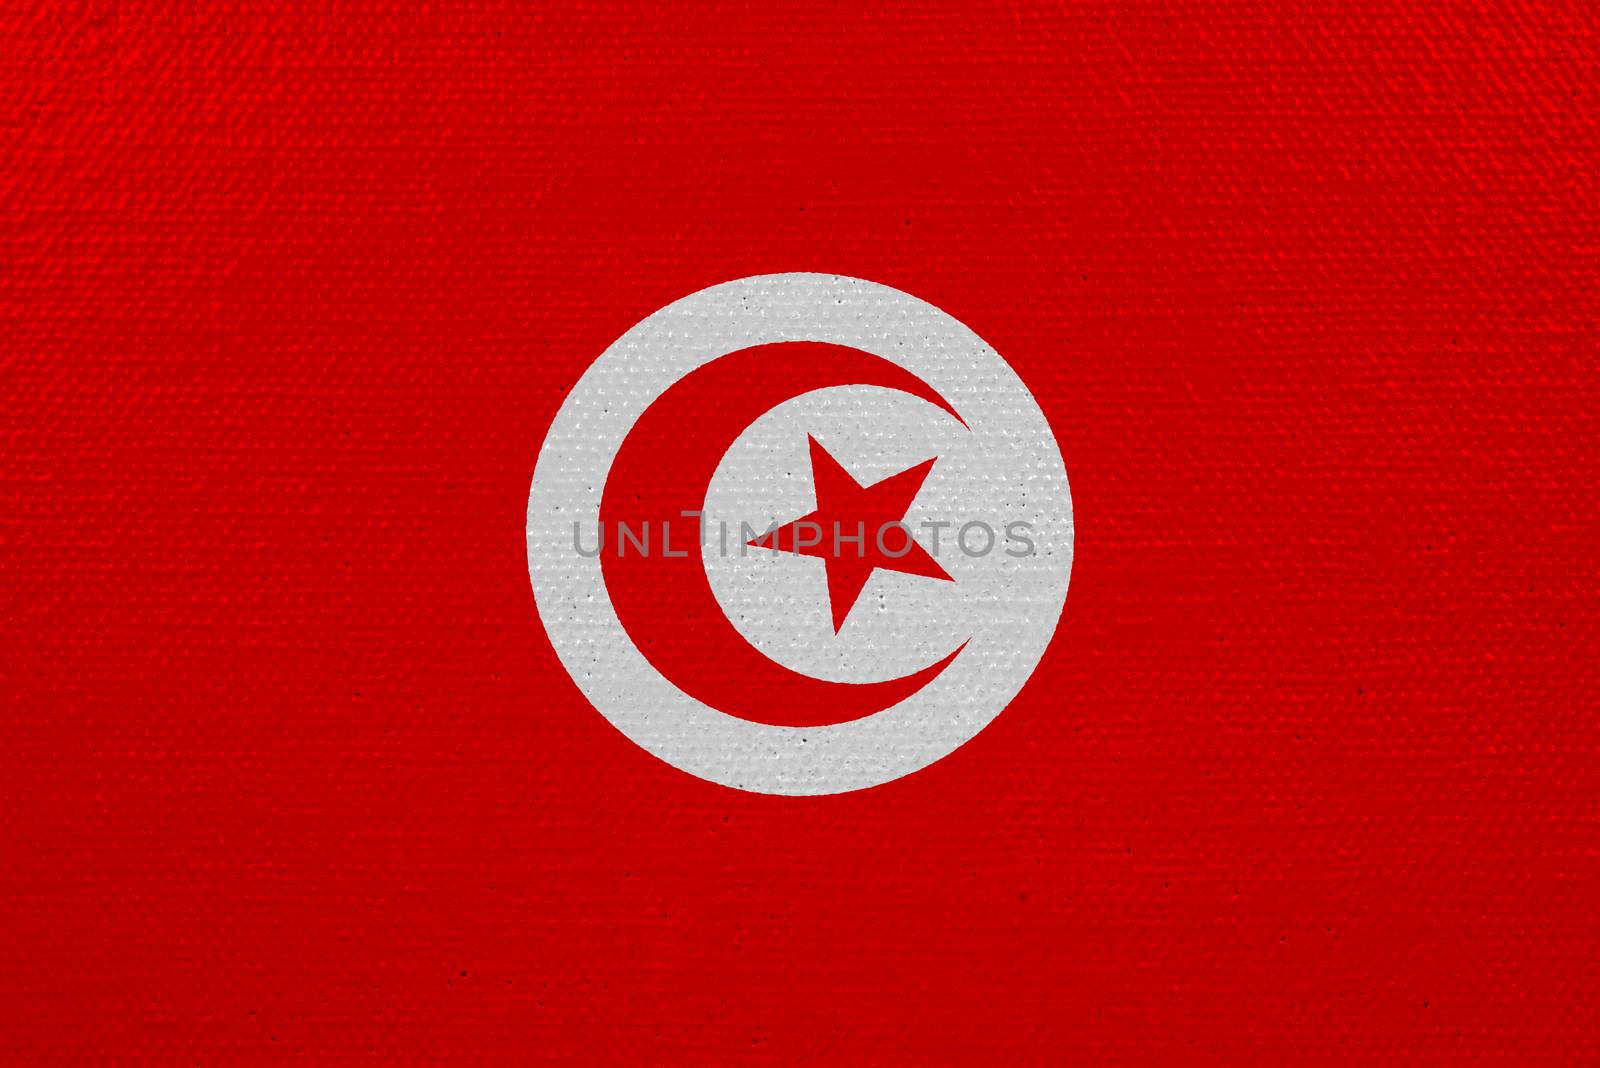 Tunisia flag on canvas. Patriotic background. National flag of Tunisia